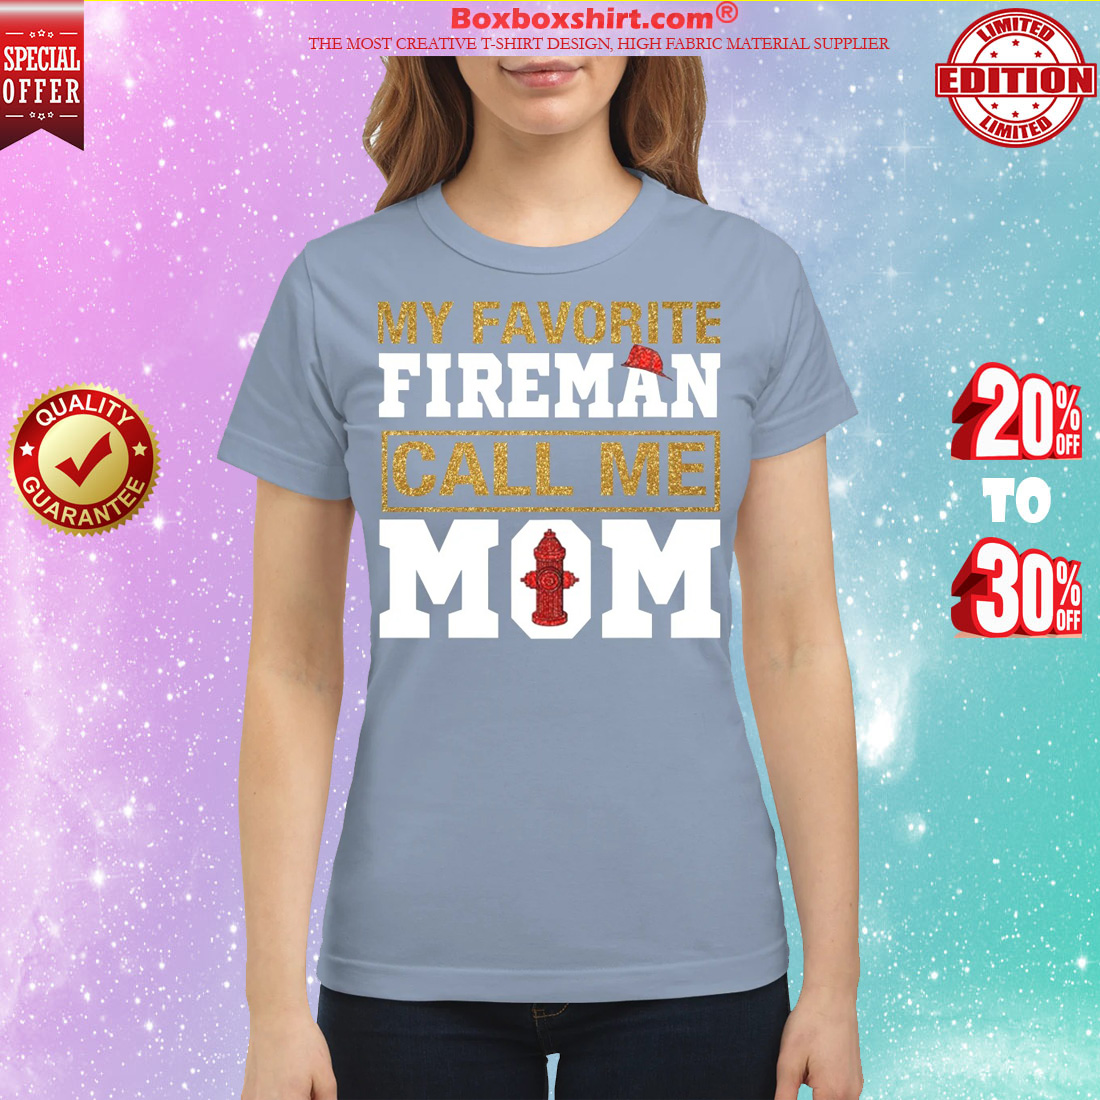 My favorite fireman call me mom classic shirt